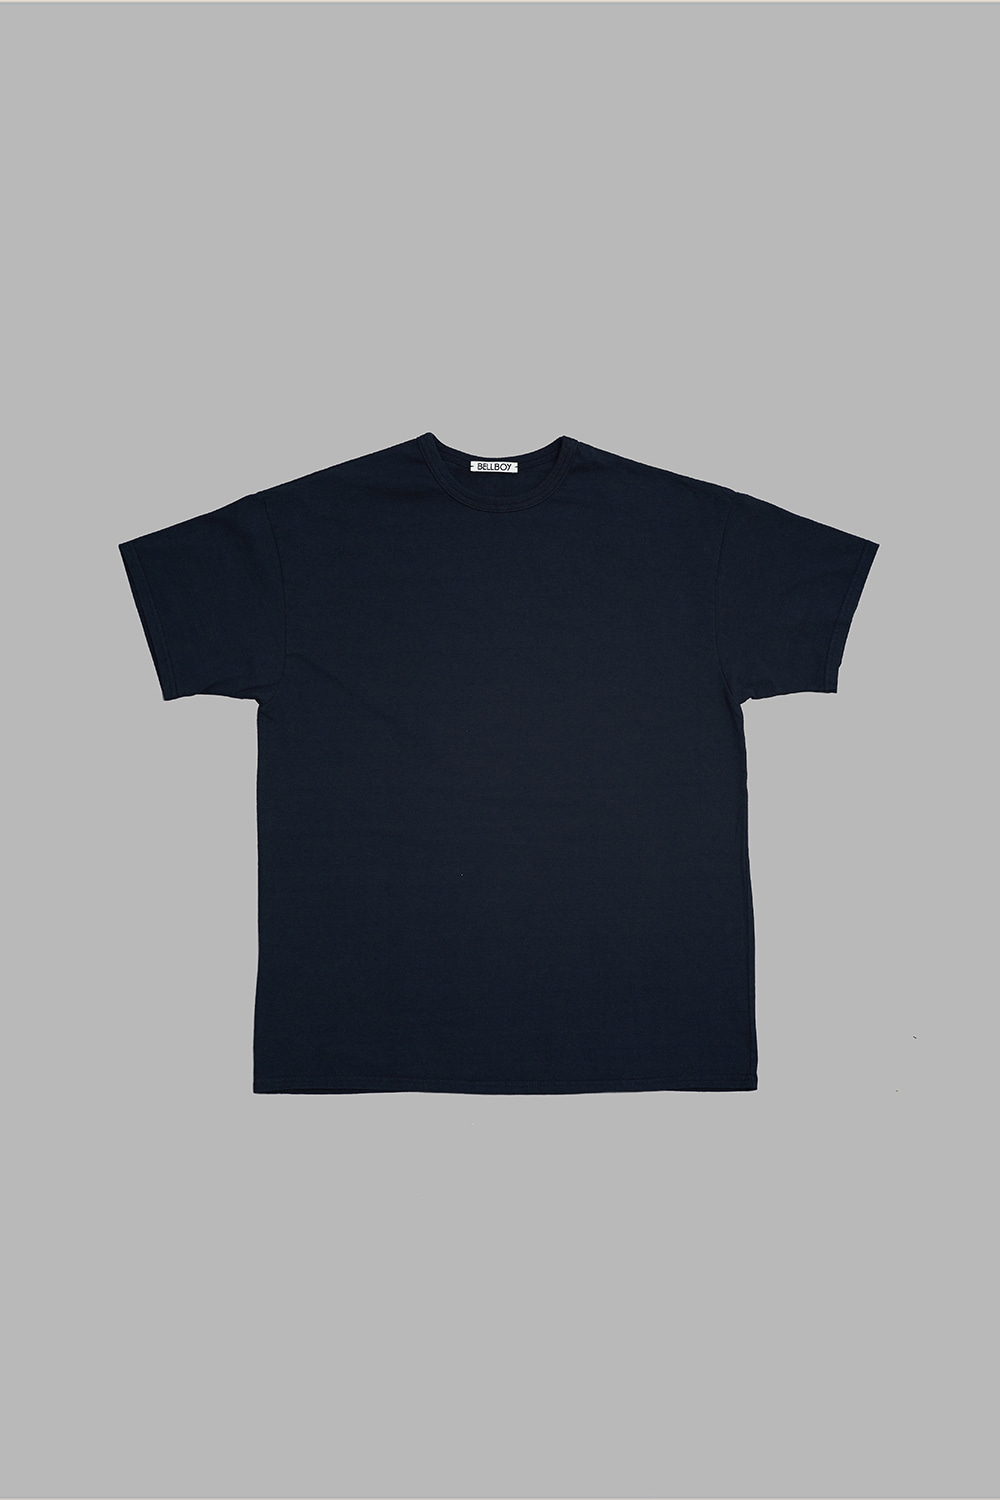 Washed Mid Weight T-Shirts - Sailor 티셔츠, 워시드 헤비웨이트 티셔츠, 옥스포드셔츠, 버튼다운셔츠, 메신저백, 캔버스백